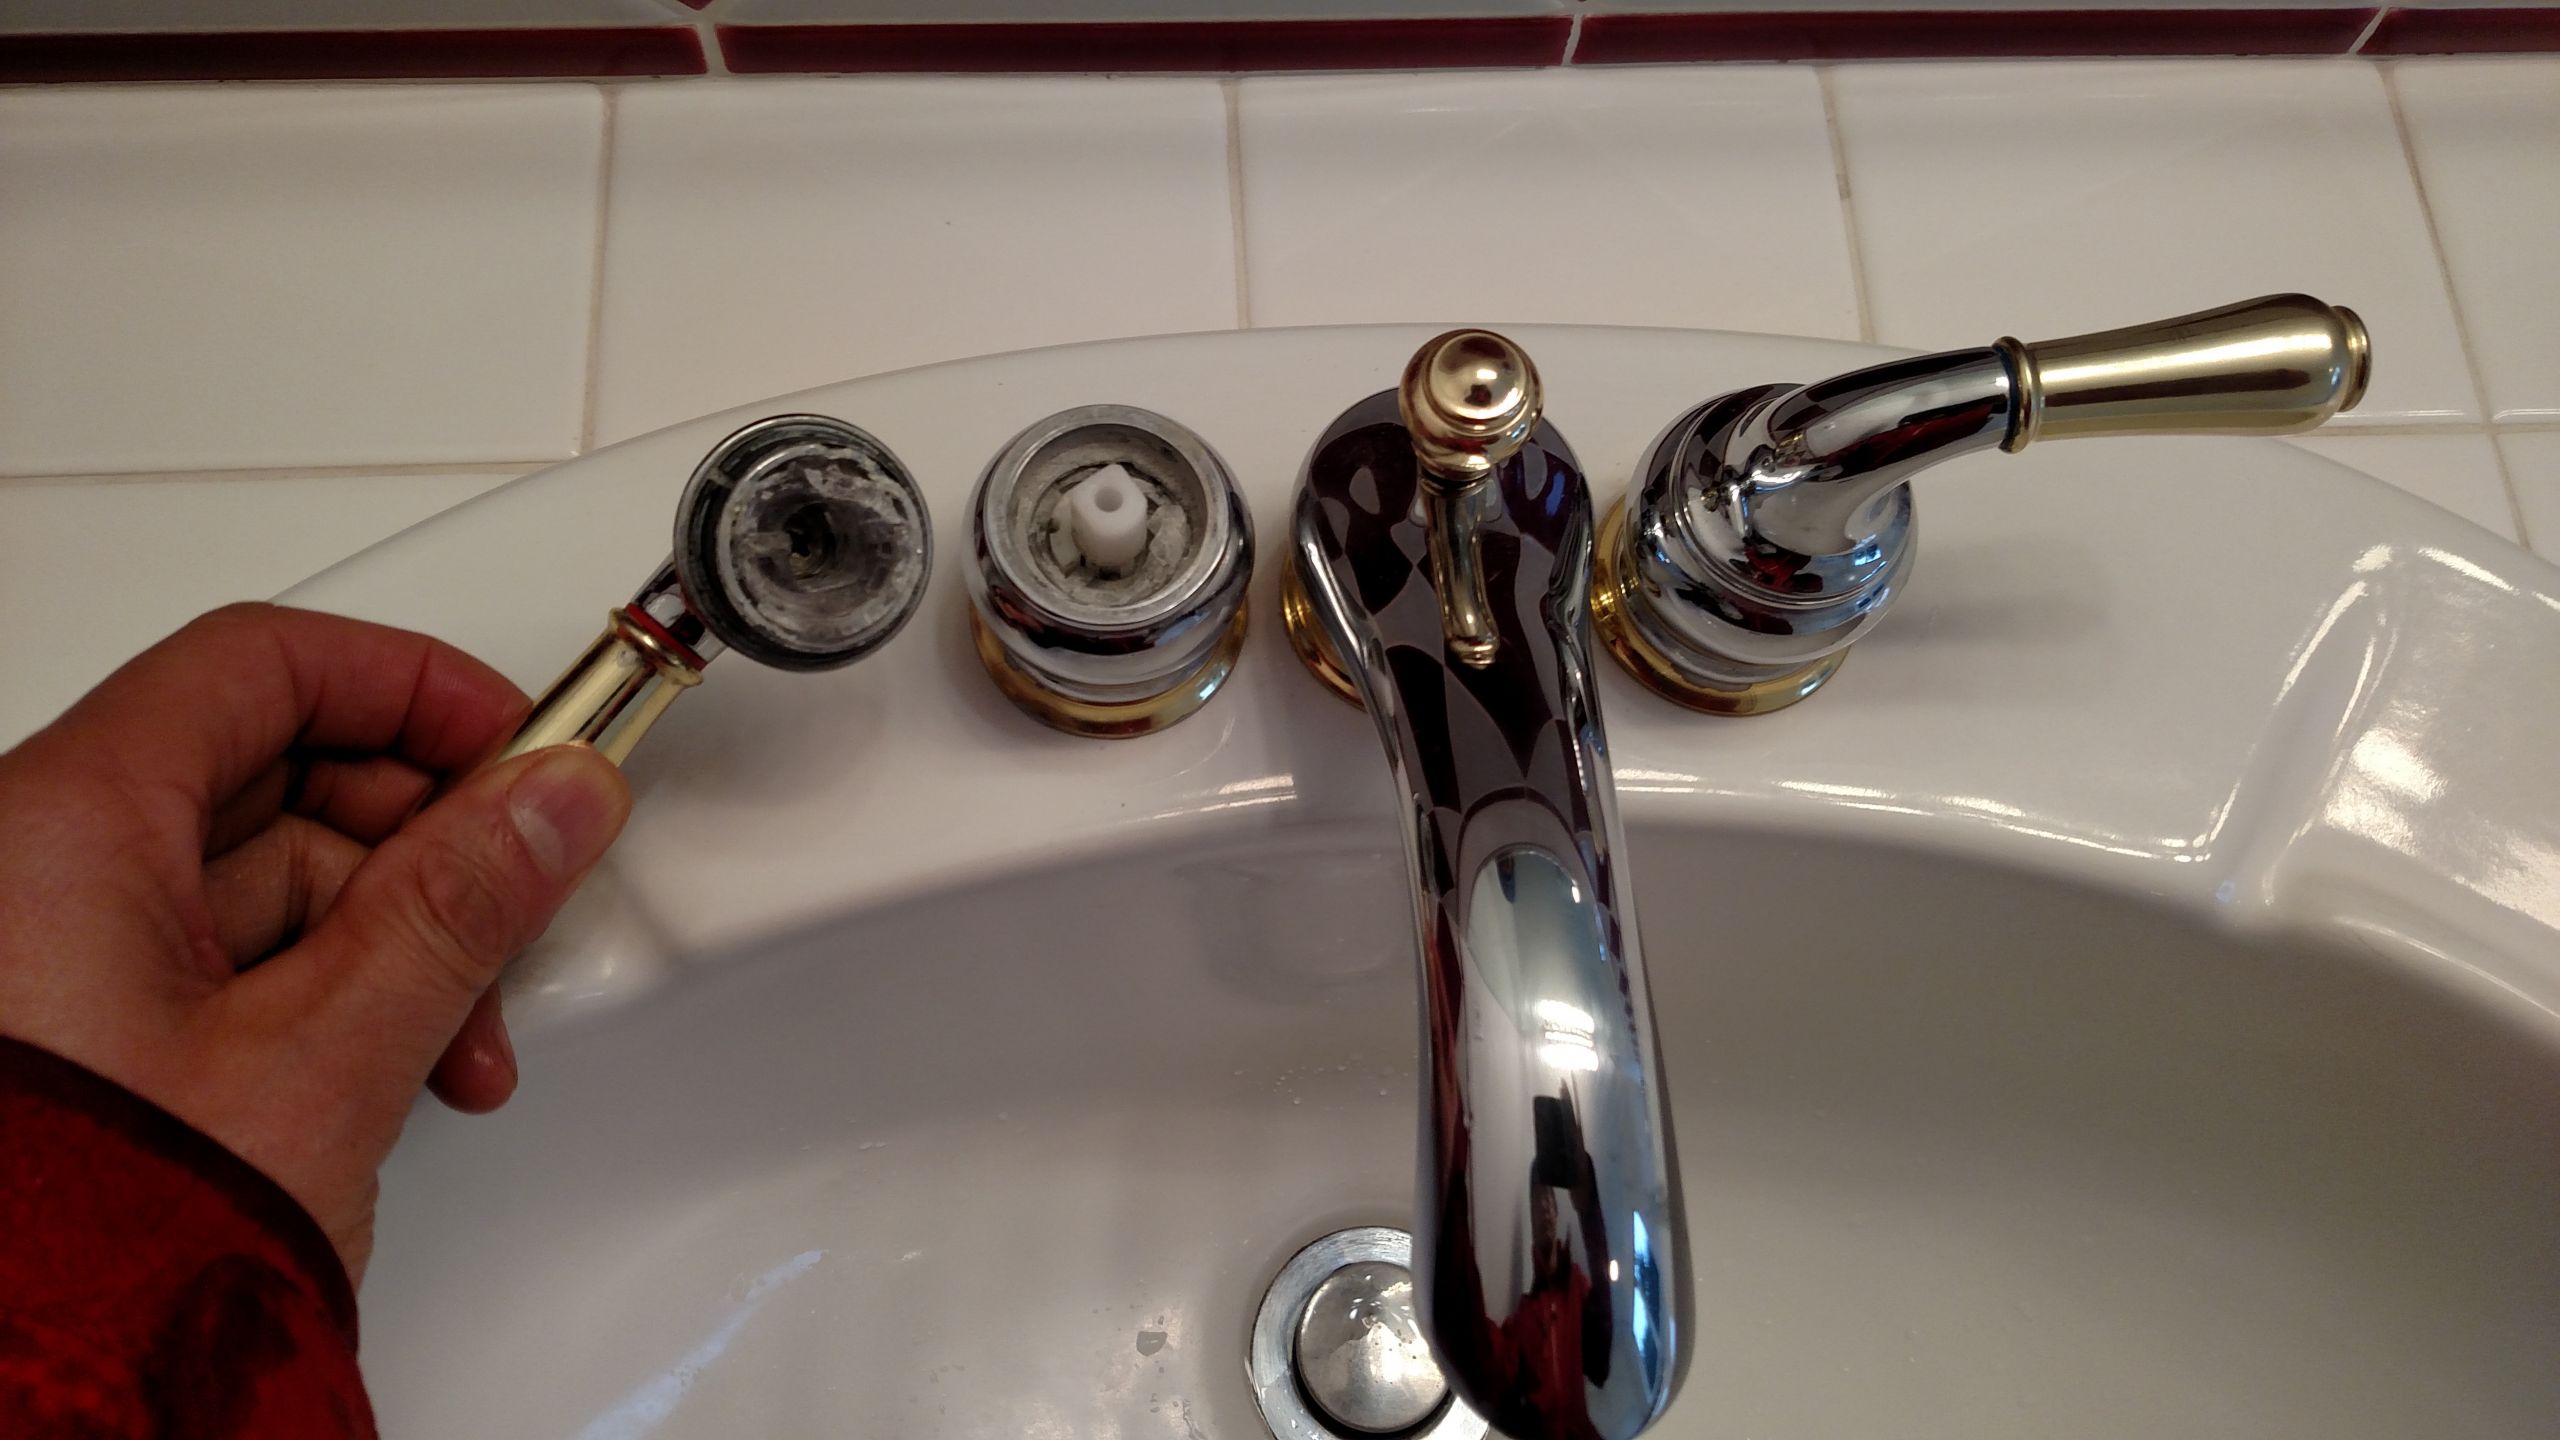 can't remove bathroom sink faucet handles